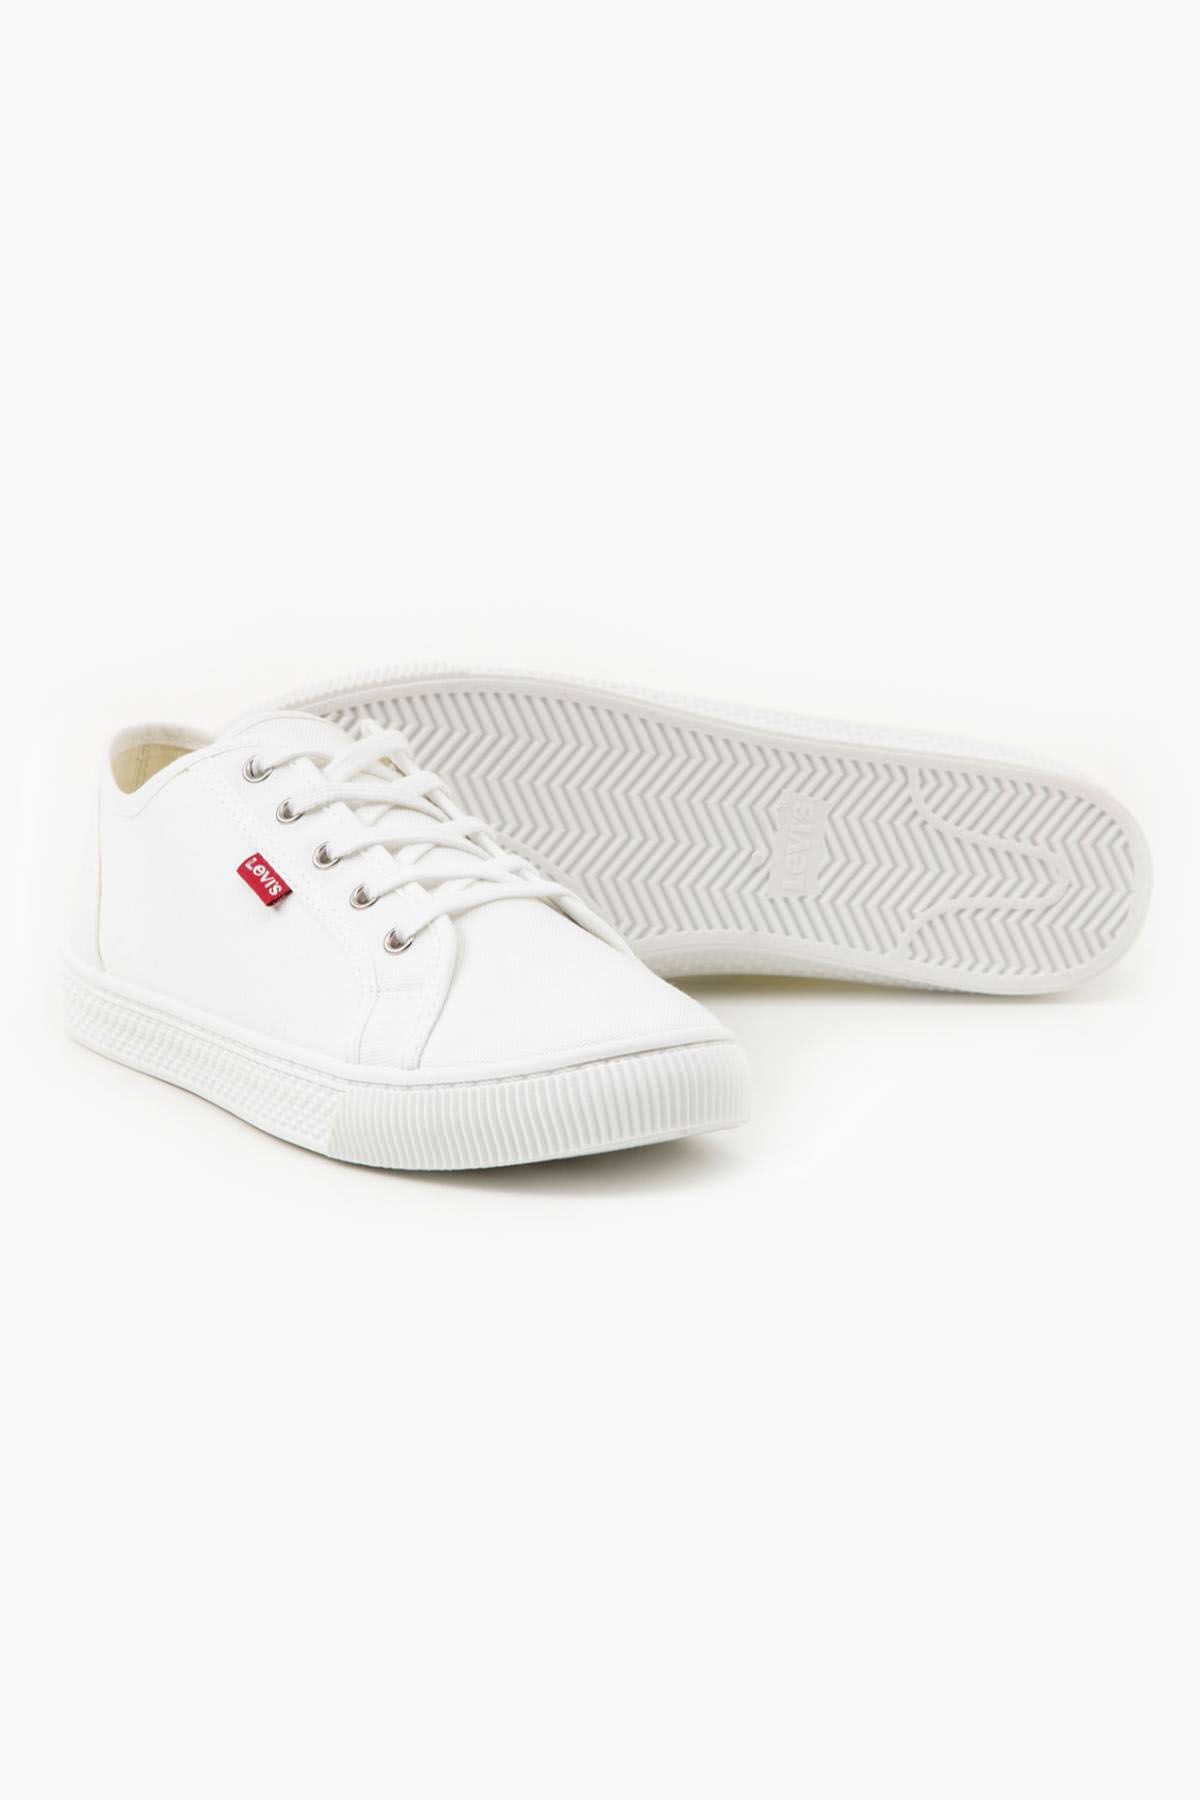 Levi's ® Levi's Women's Malibu Beach Sneakers White Women Sneakers